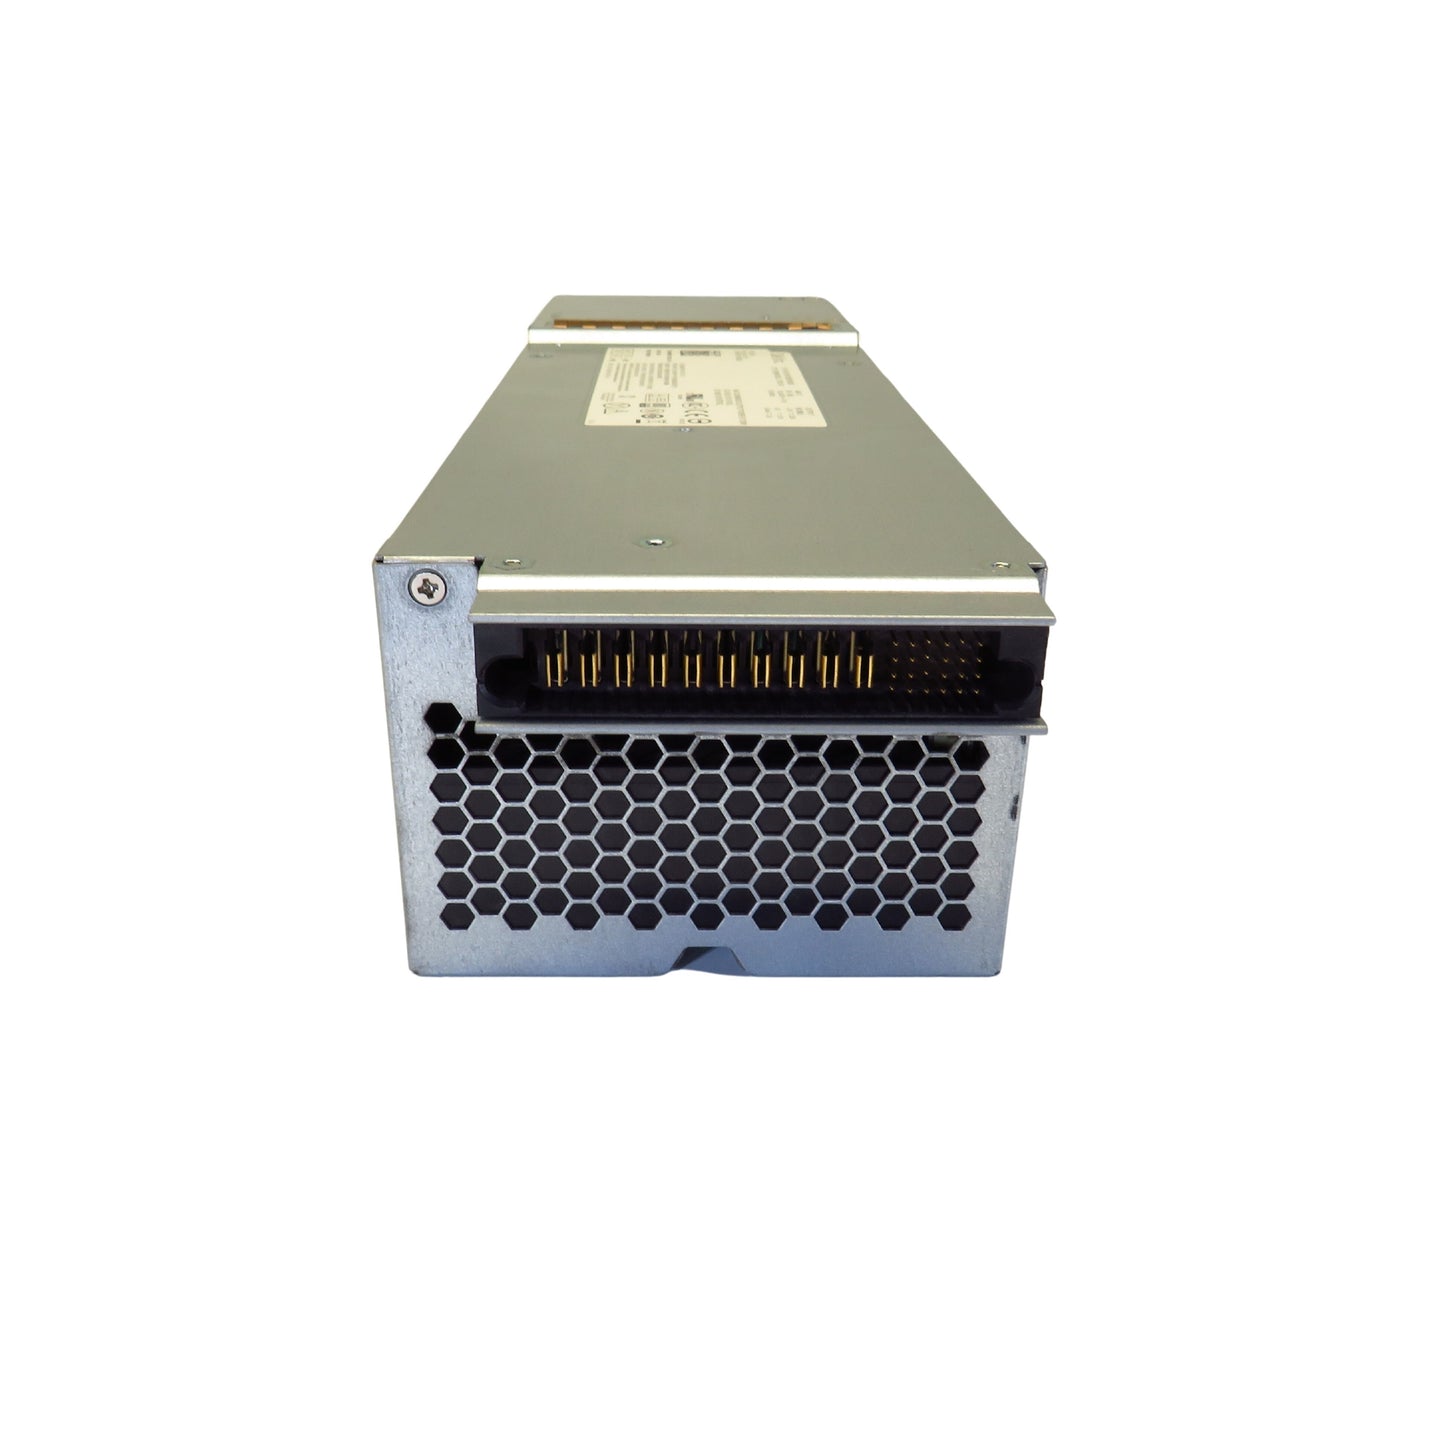 Dell 2KWF1 700W Redundant PowerEdge Server Power Supply (Refurbished)